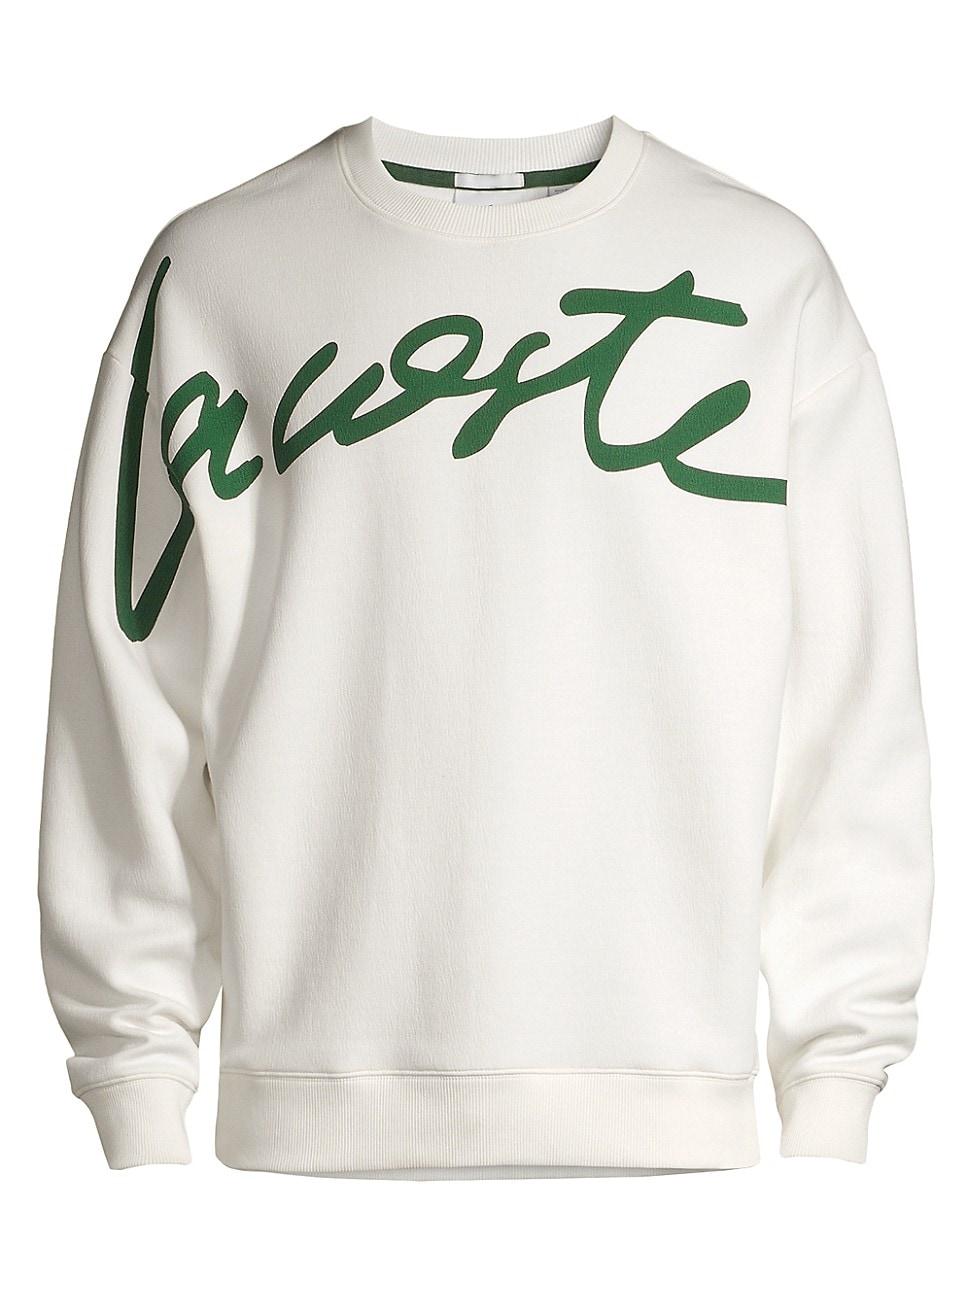 Lacoste Cotton L!ve New Script Logo Sweatshirt in Marine White (White) for  Men - Lyst